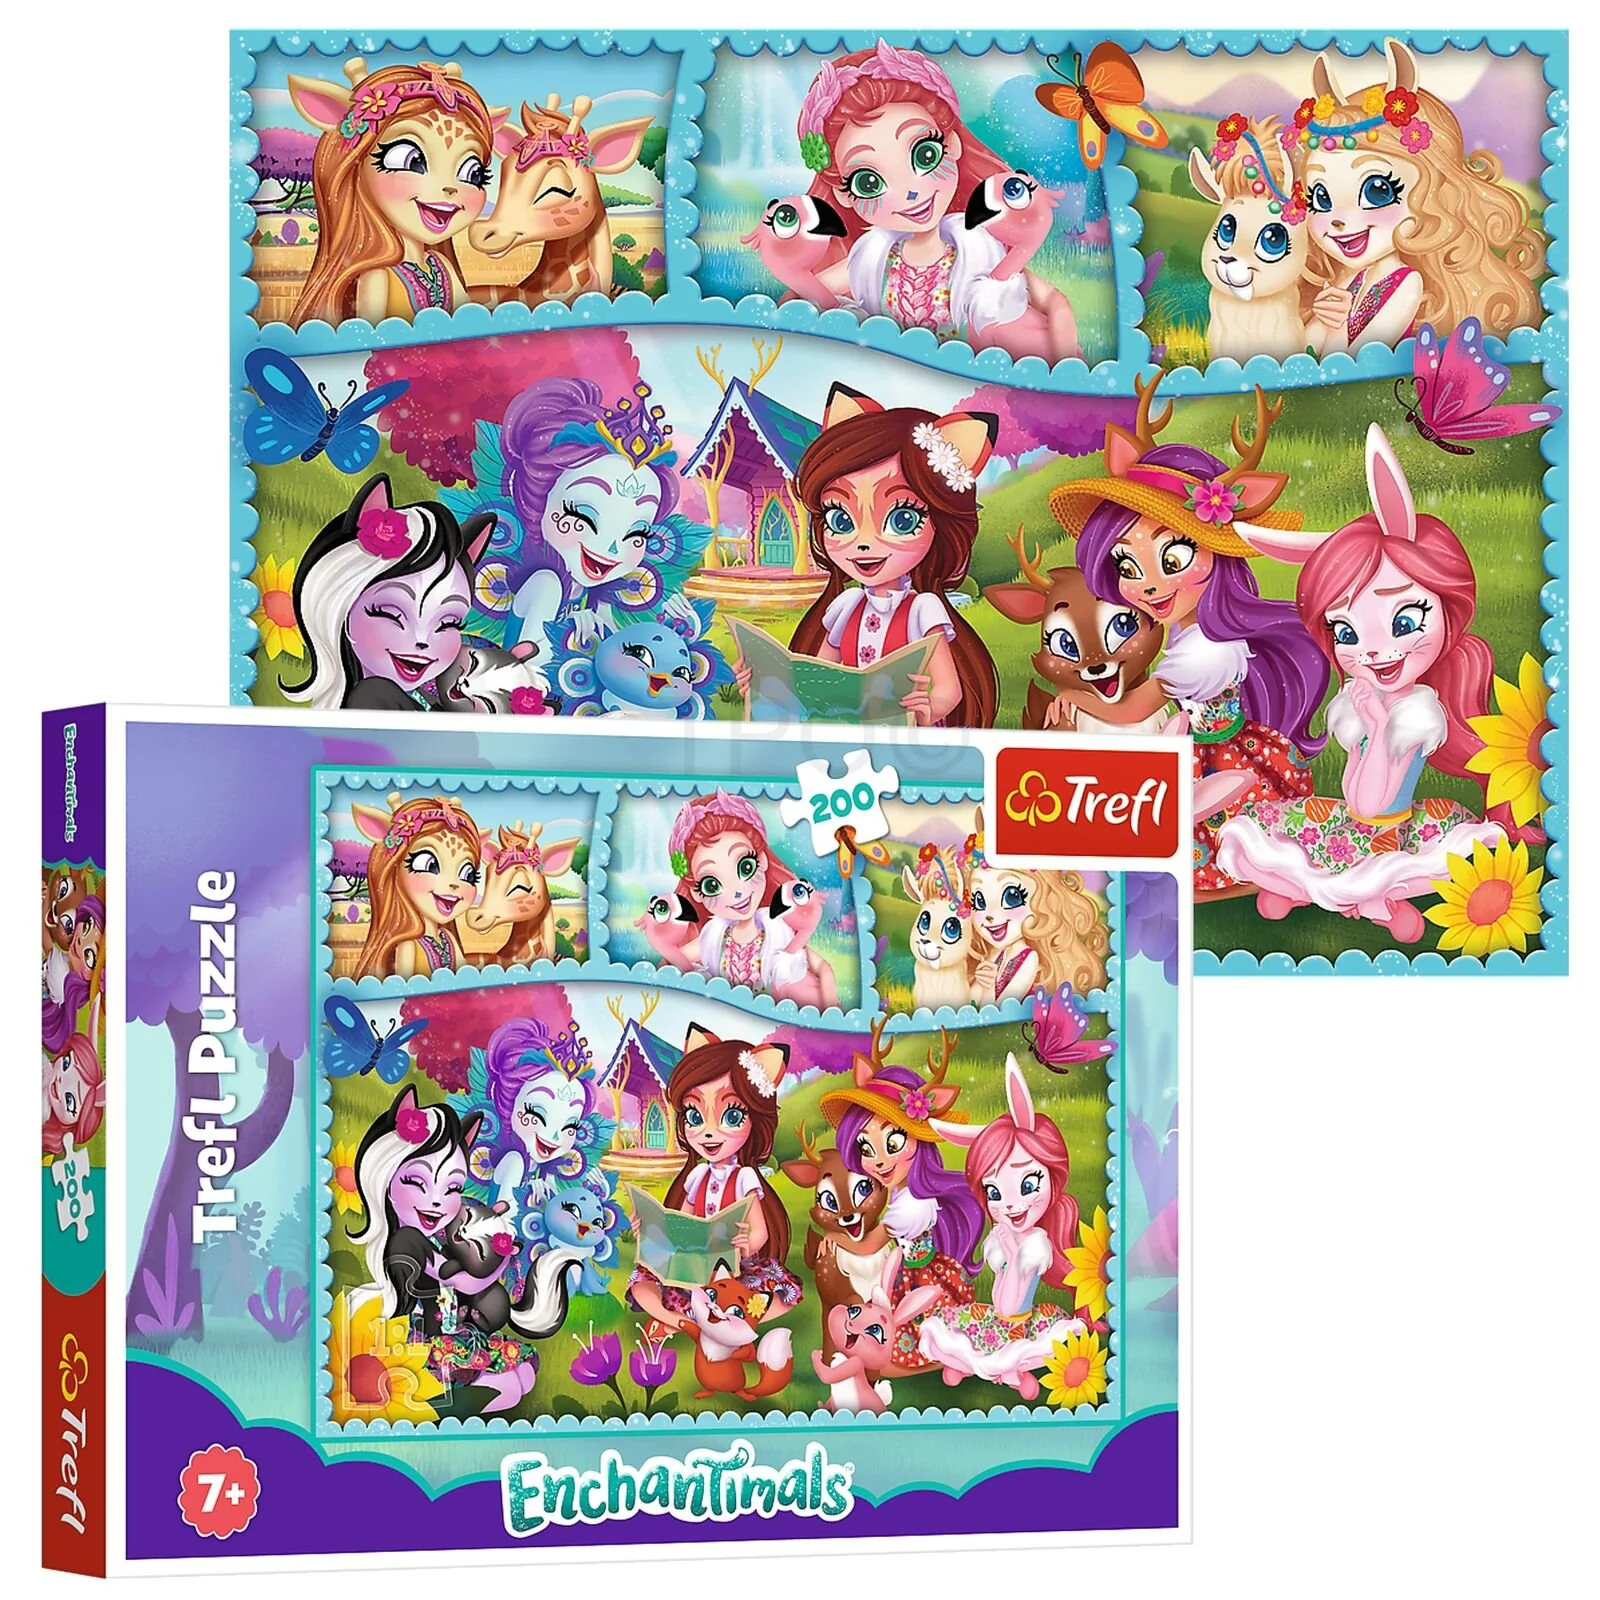 Puzzle Trefl Amazing Enchantimals world / Mattel Enchantimals, 200 piese